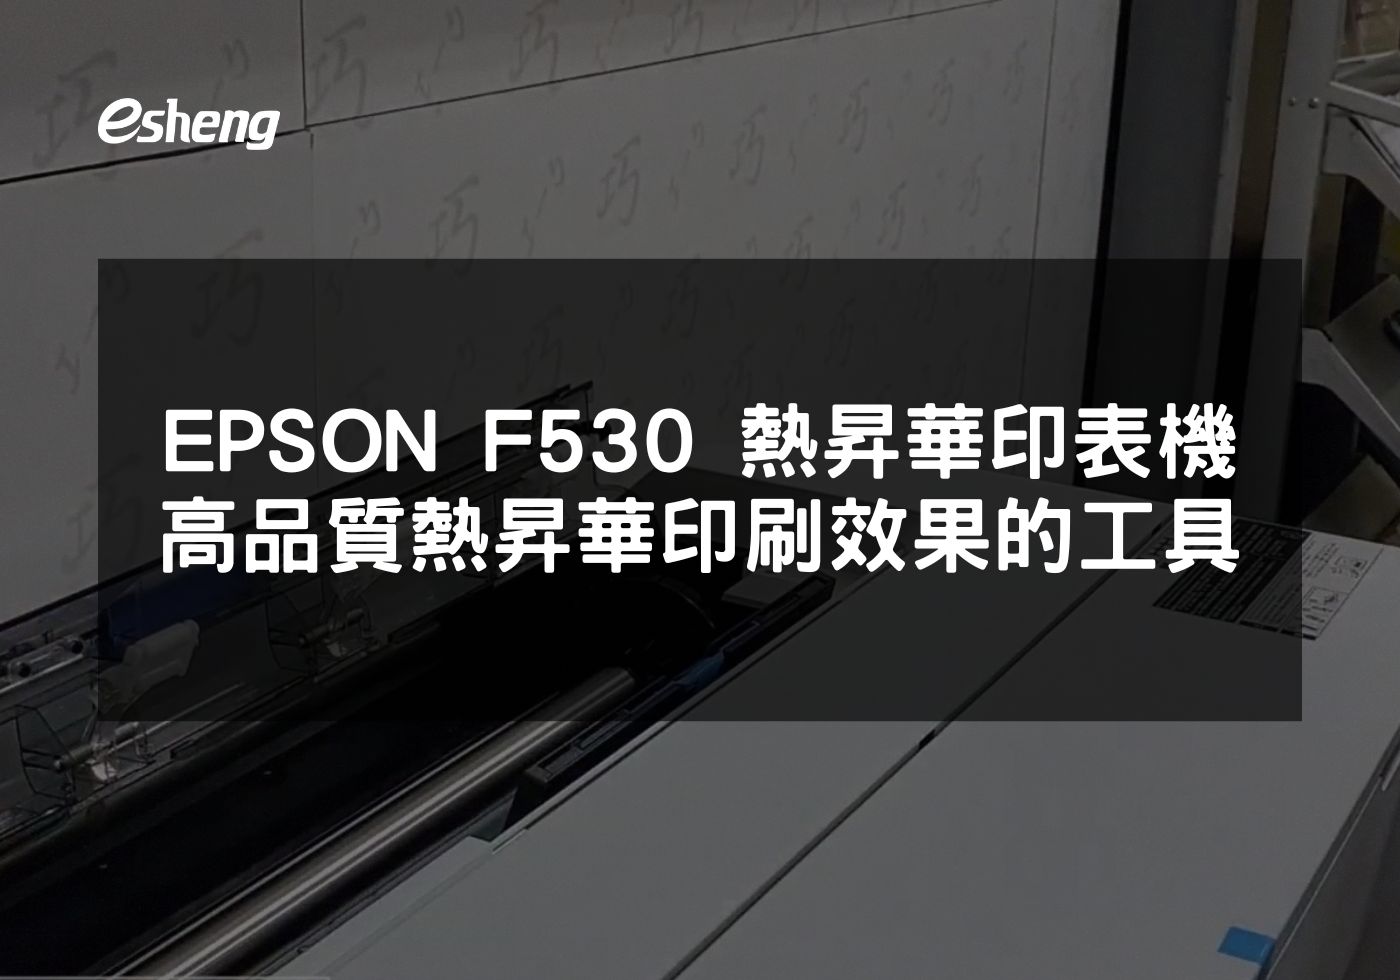 EPSON F530熱昇華印表機提升企業品牌形象